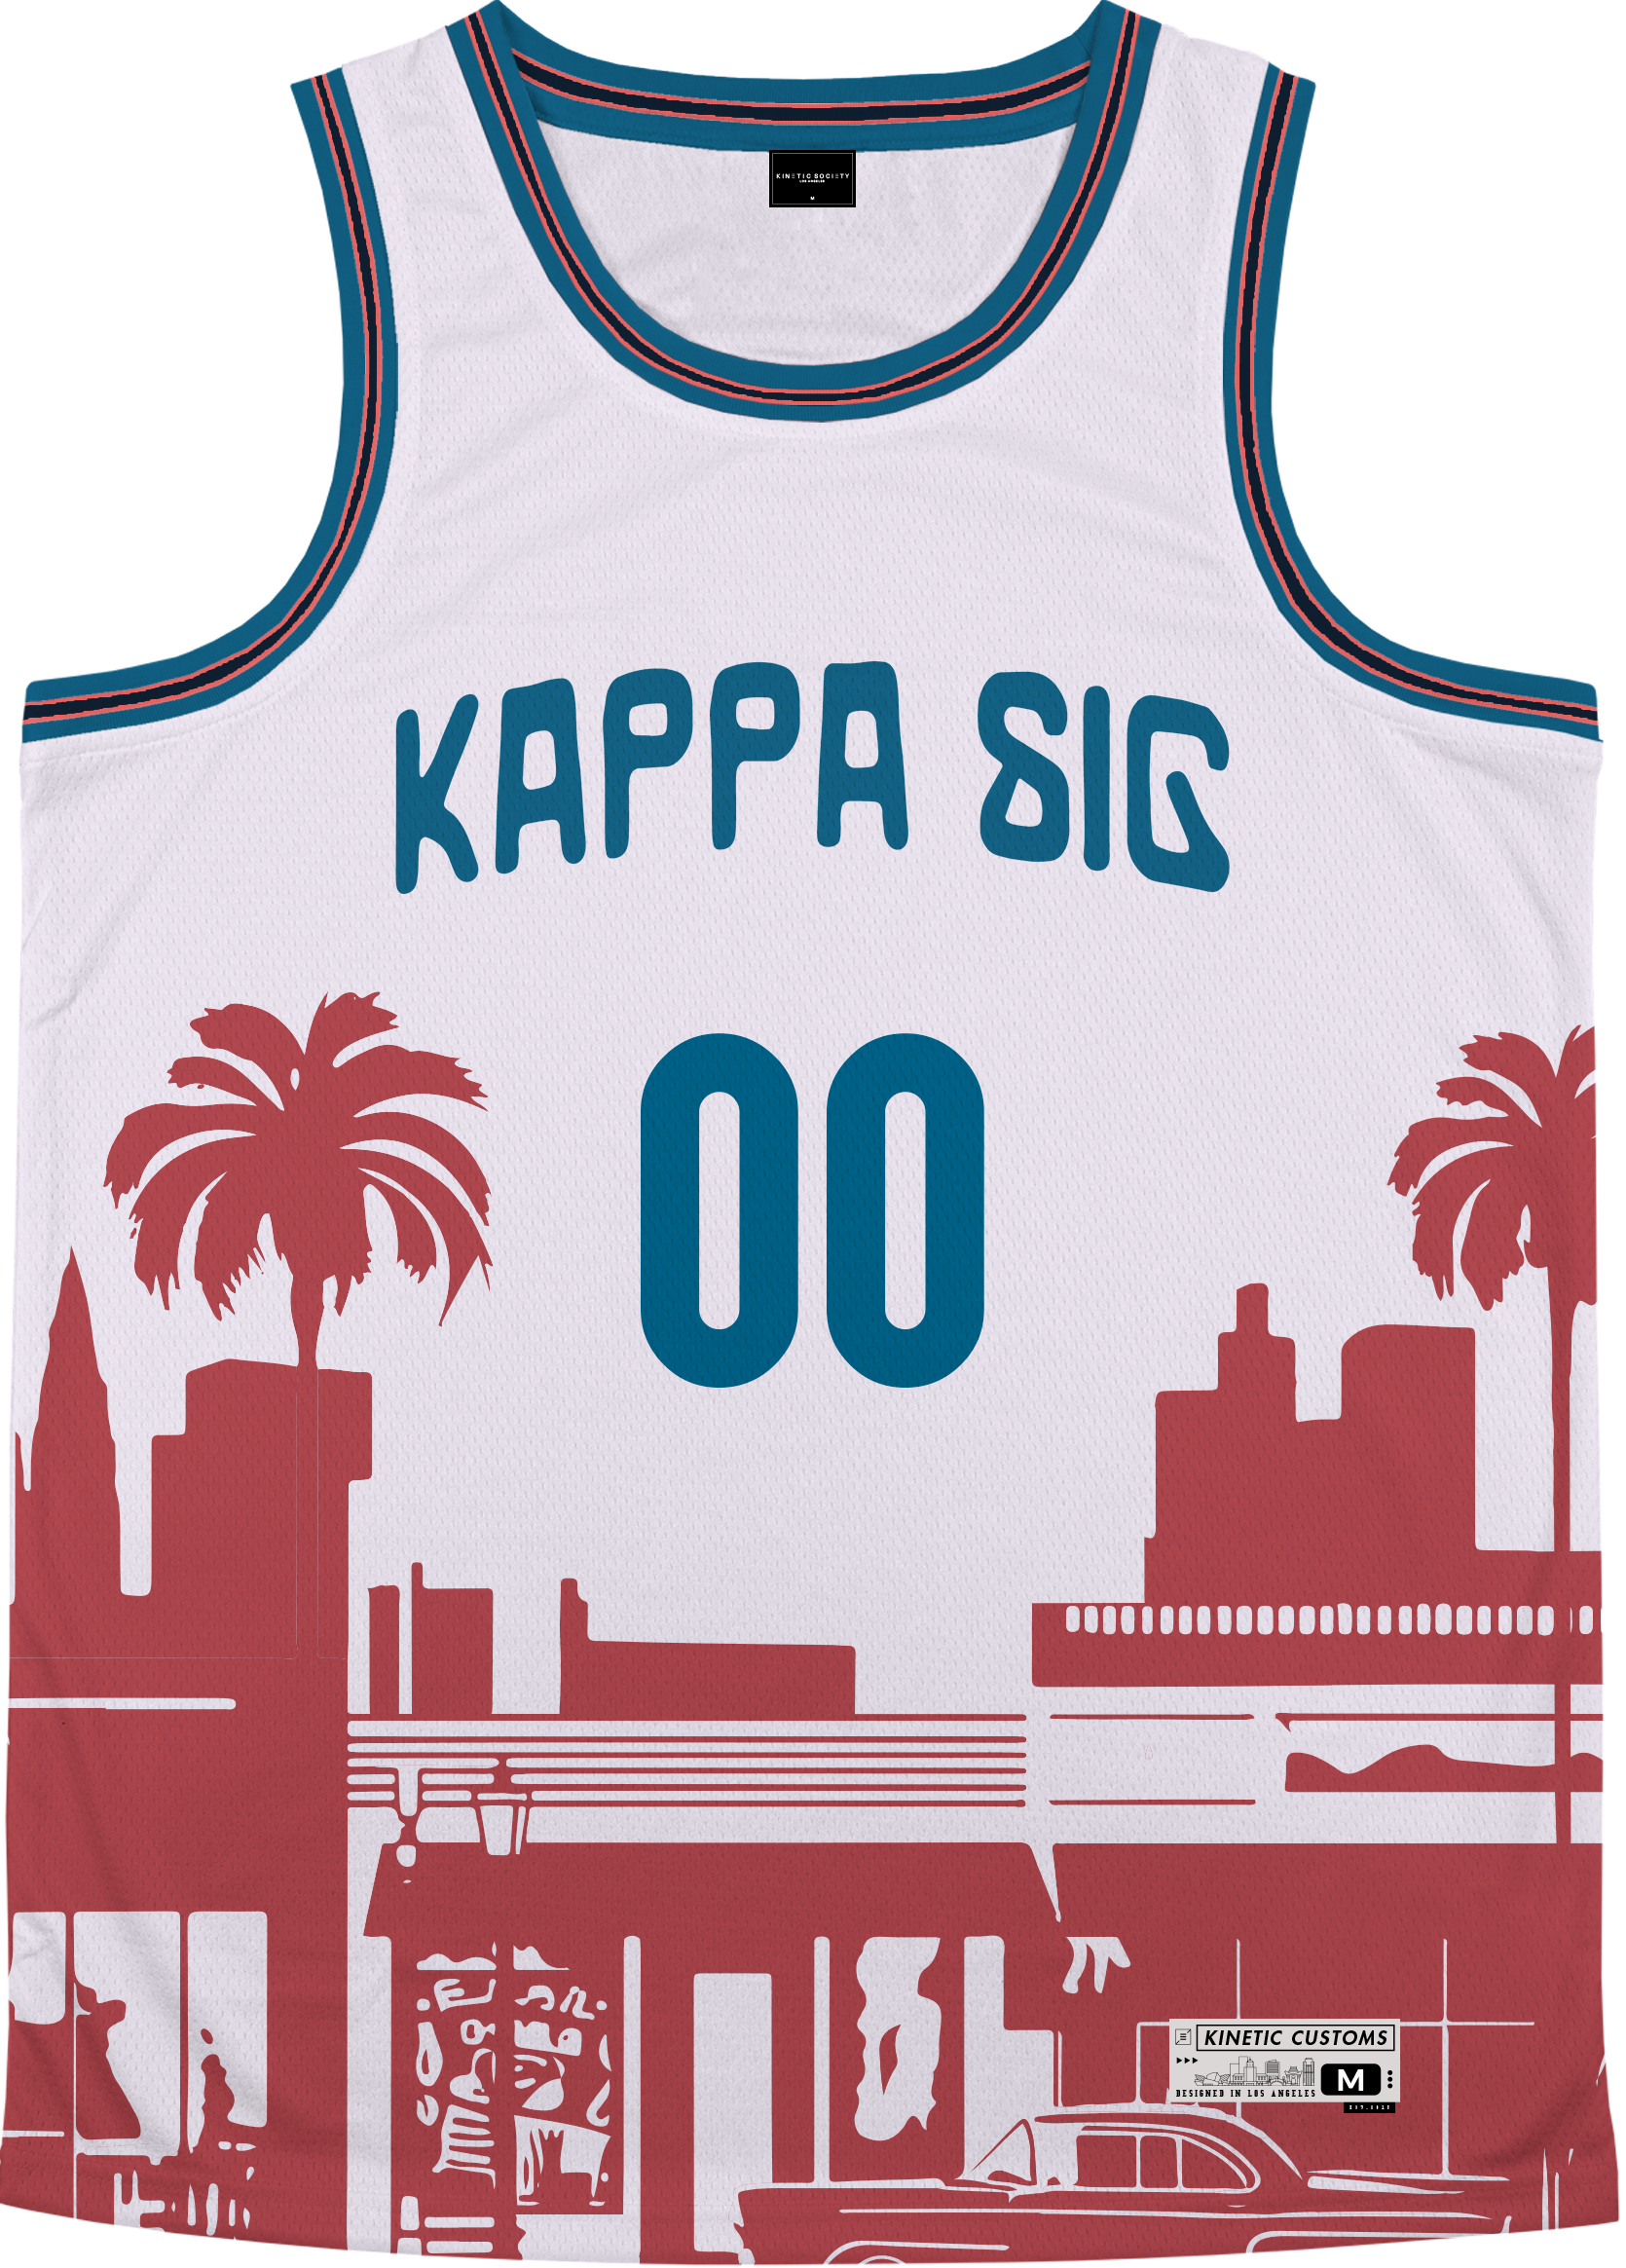 KAPPA SIGMA - Town Lights Basketball Jersey